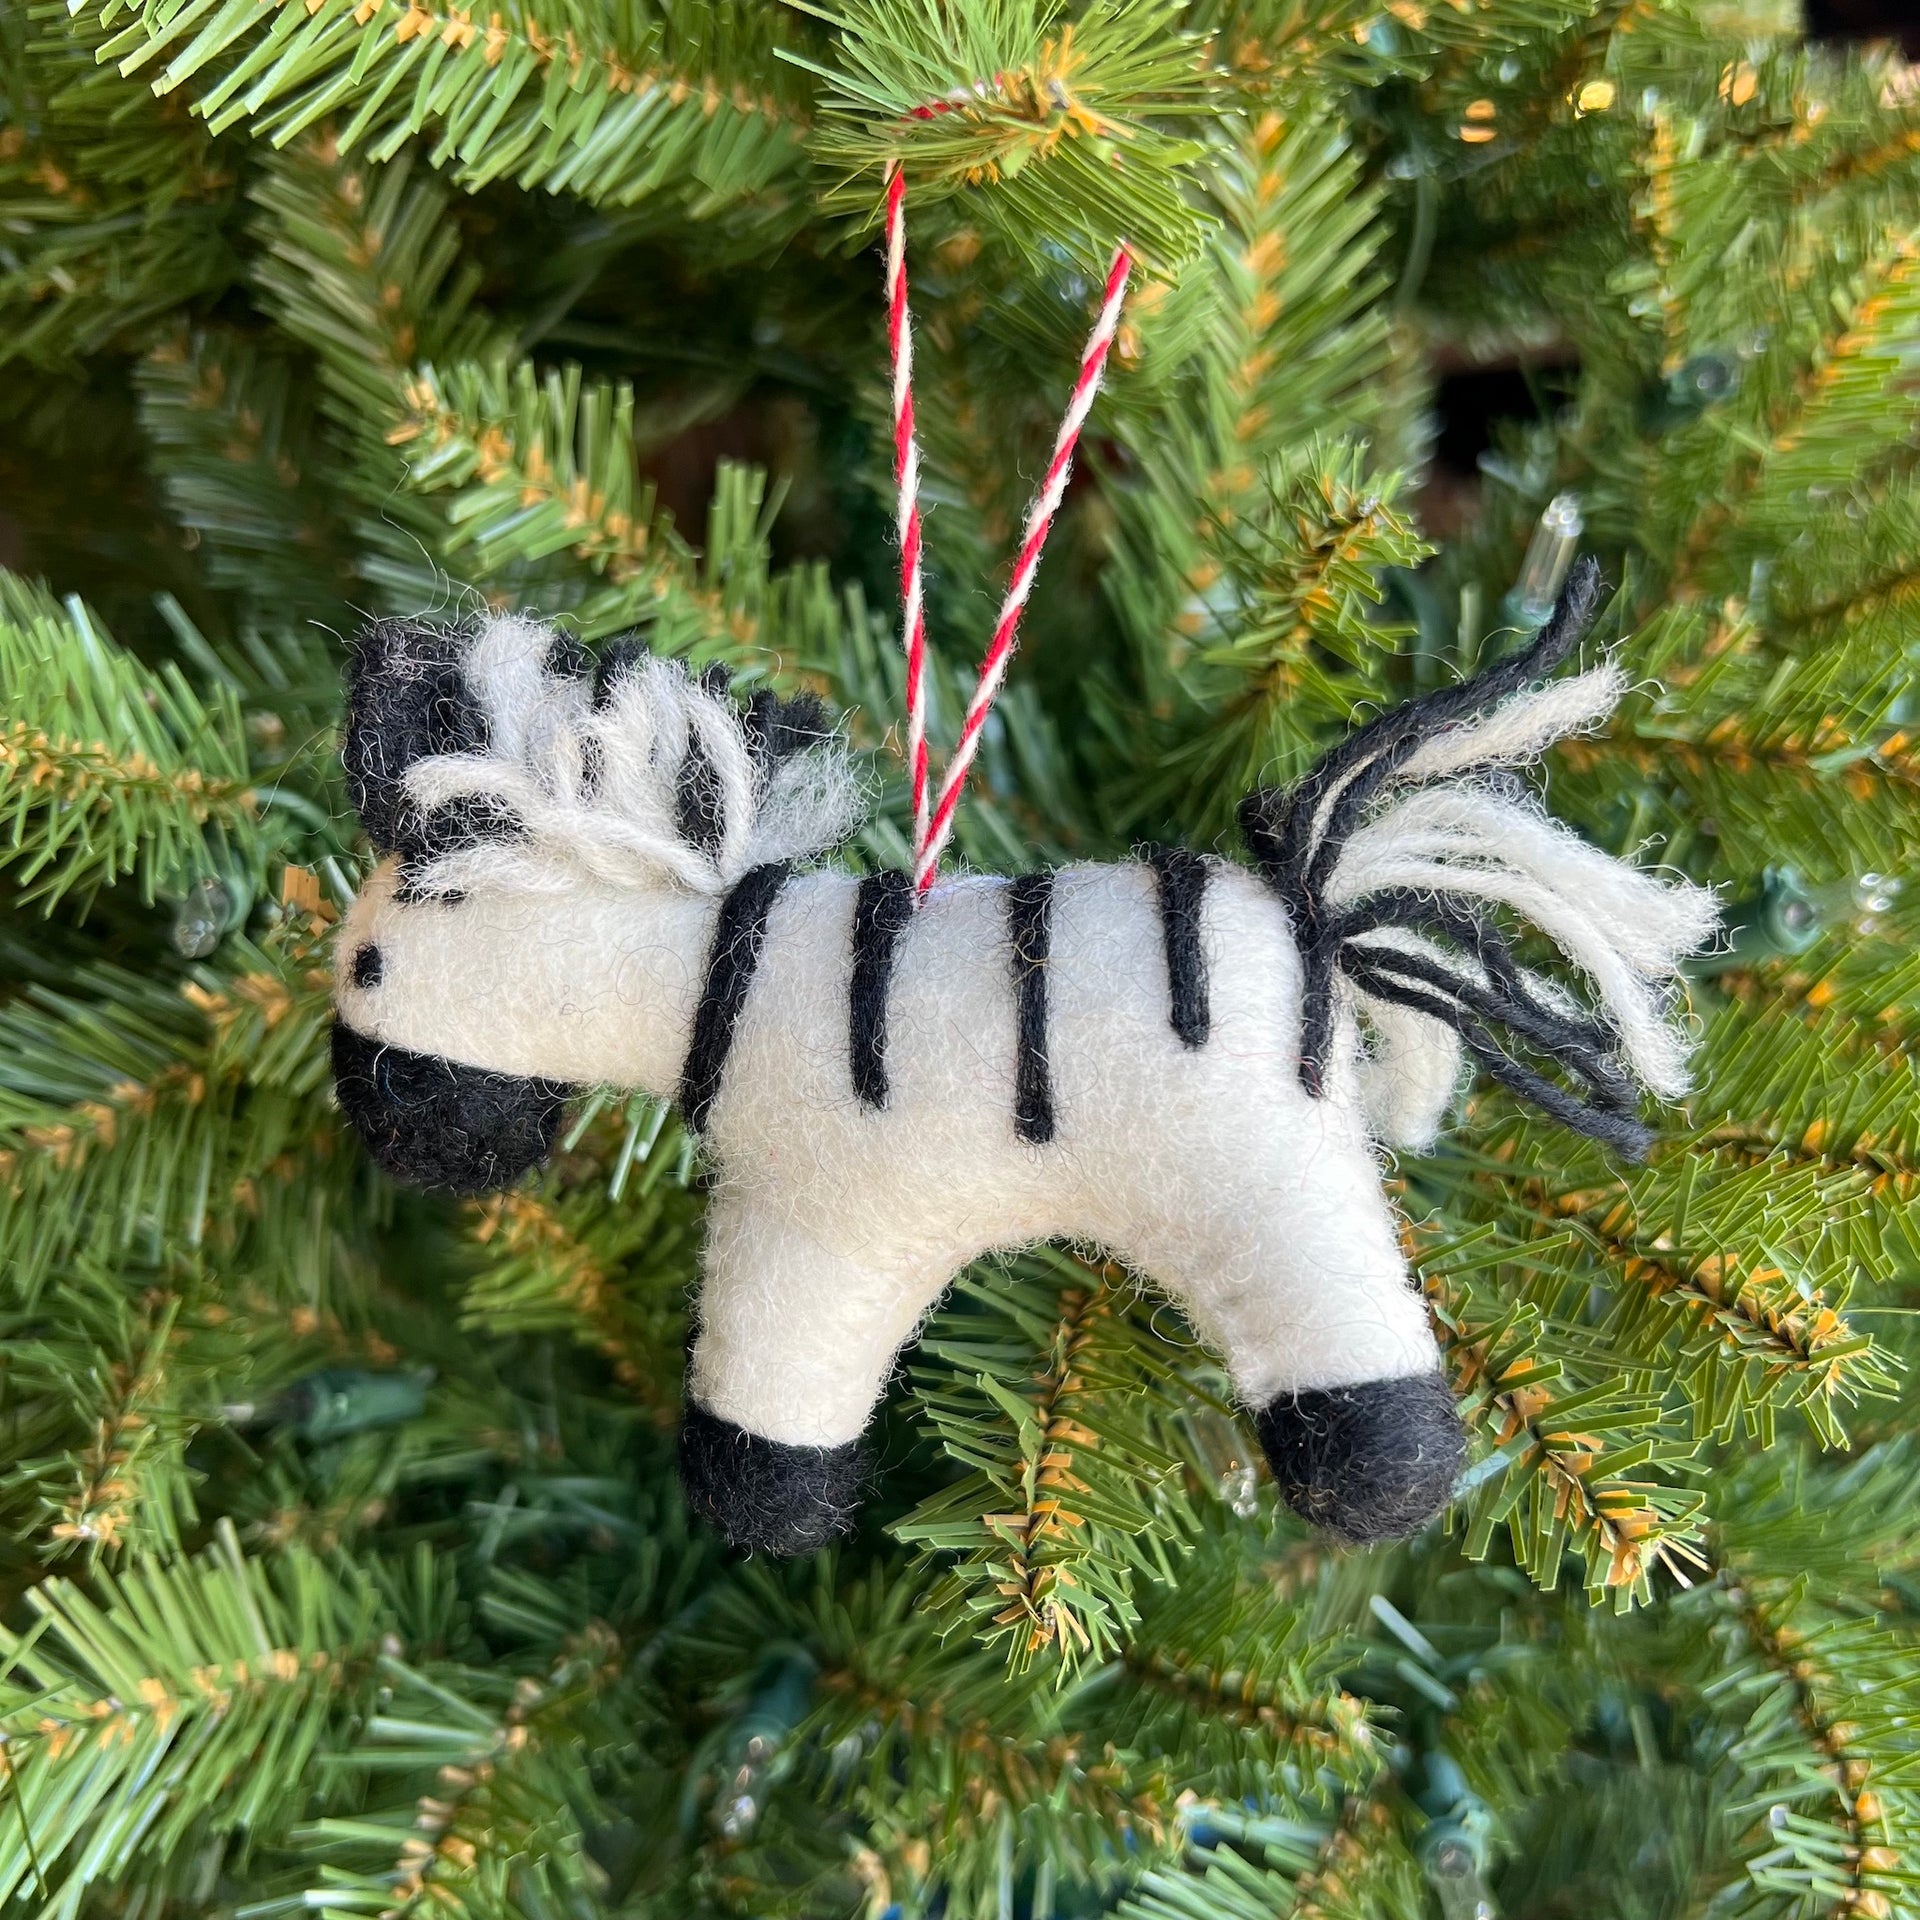 Felt Zebra Ornament hanging on a Christmas Tree